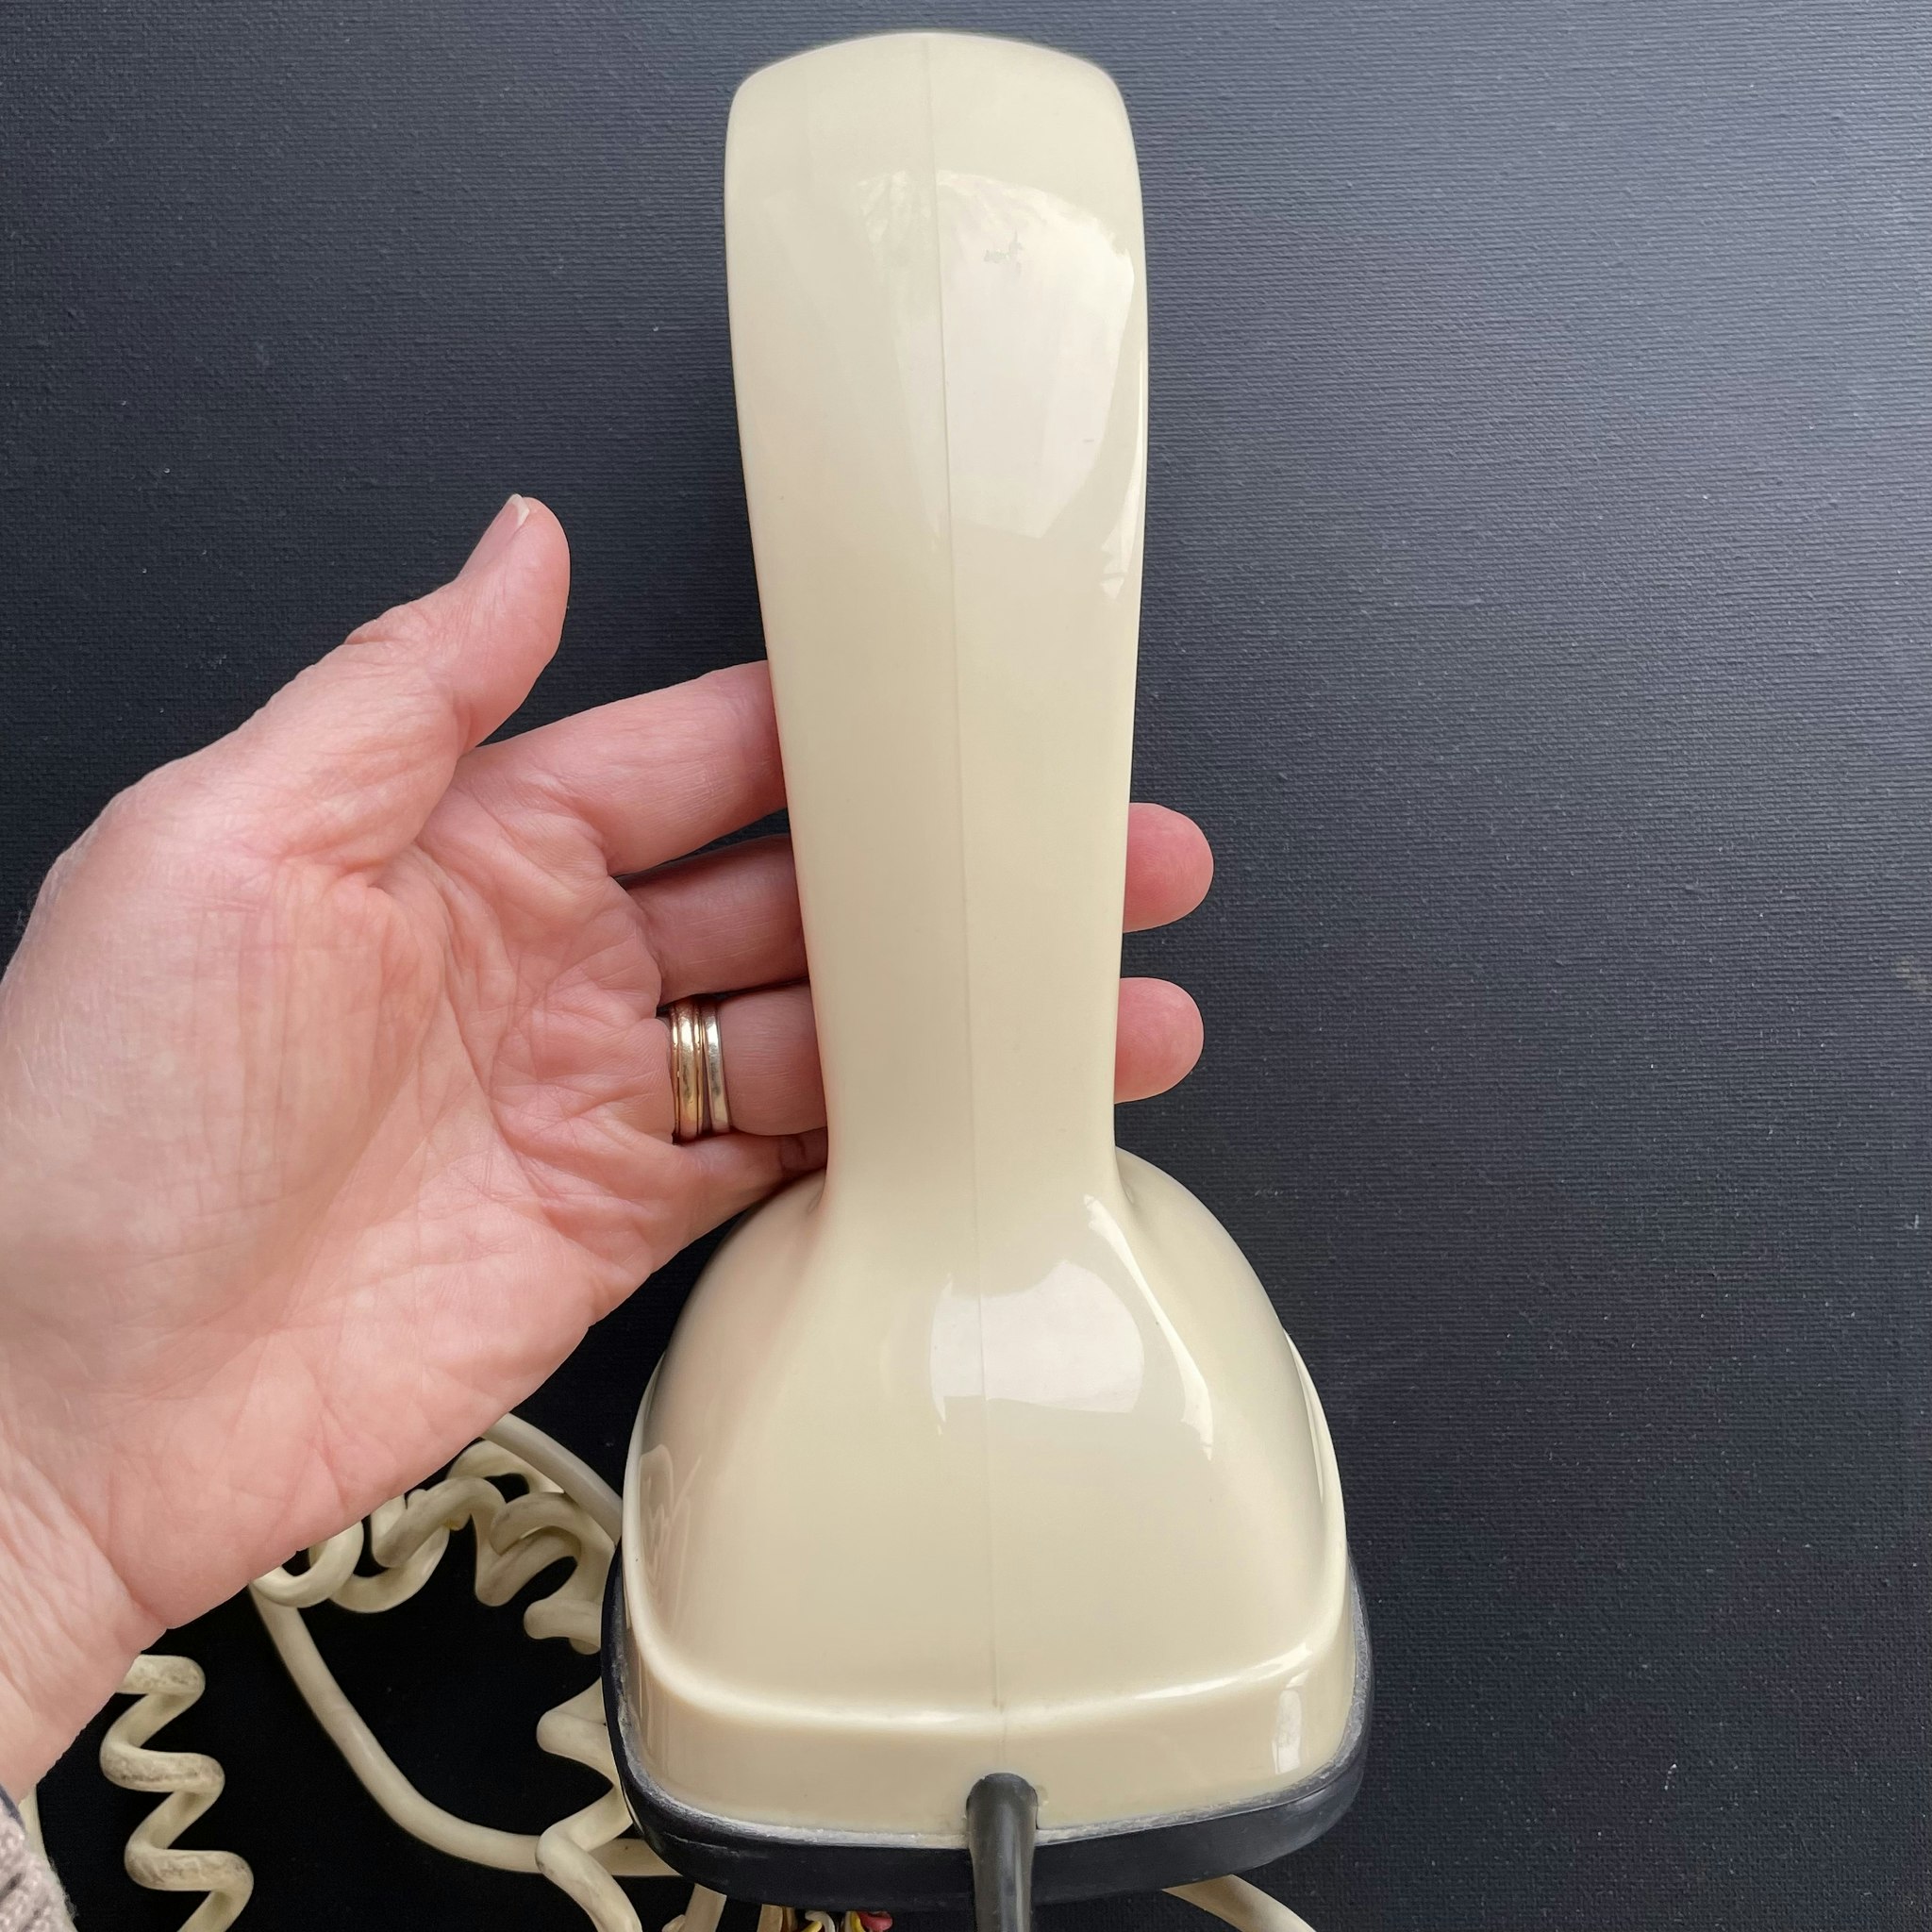 Genuine vintage Ericsson Ericofon Cobra telephone #1893